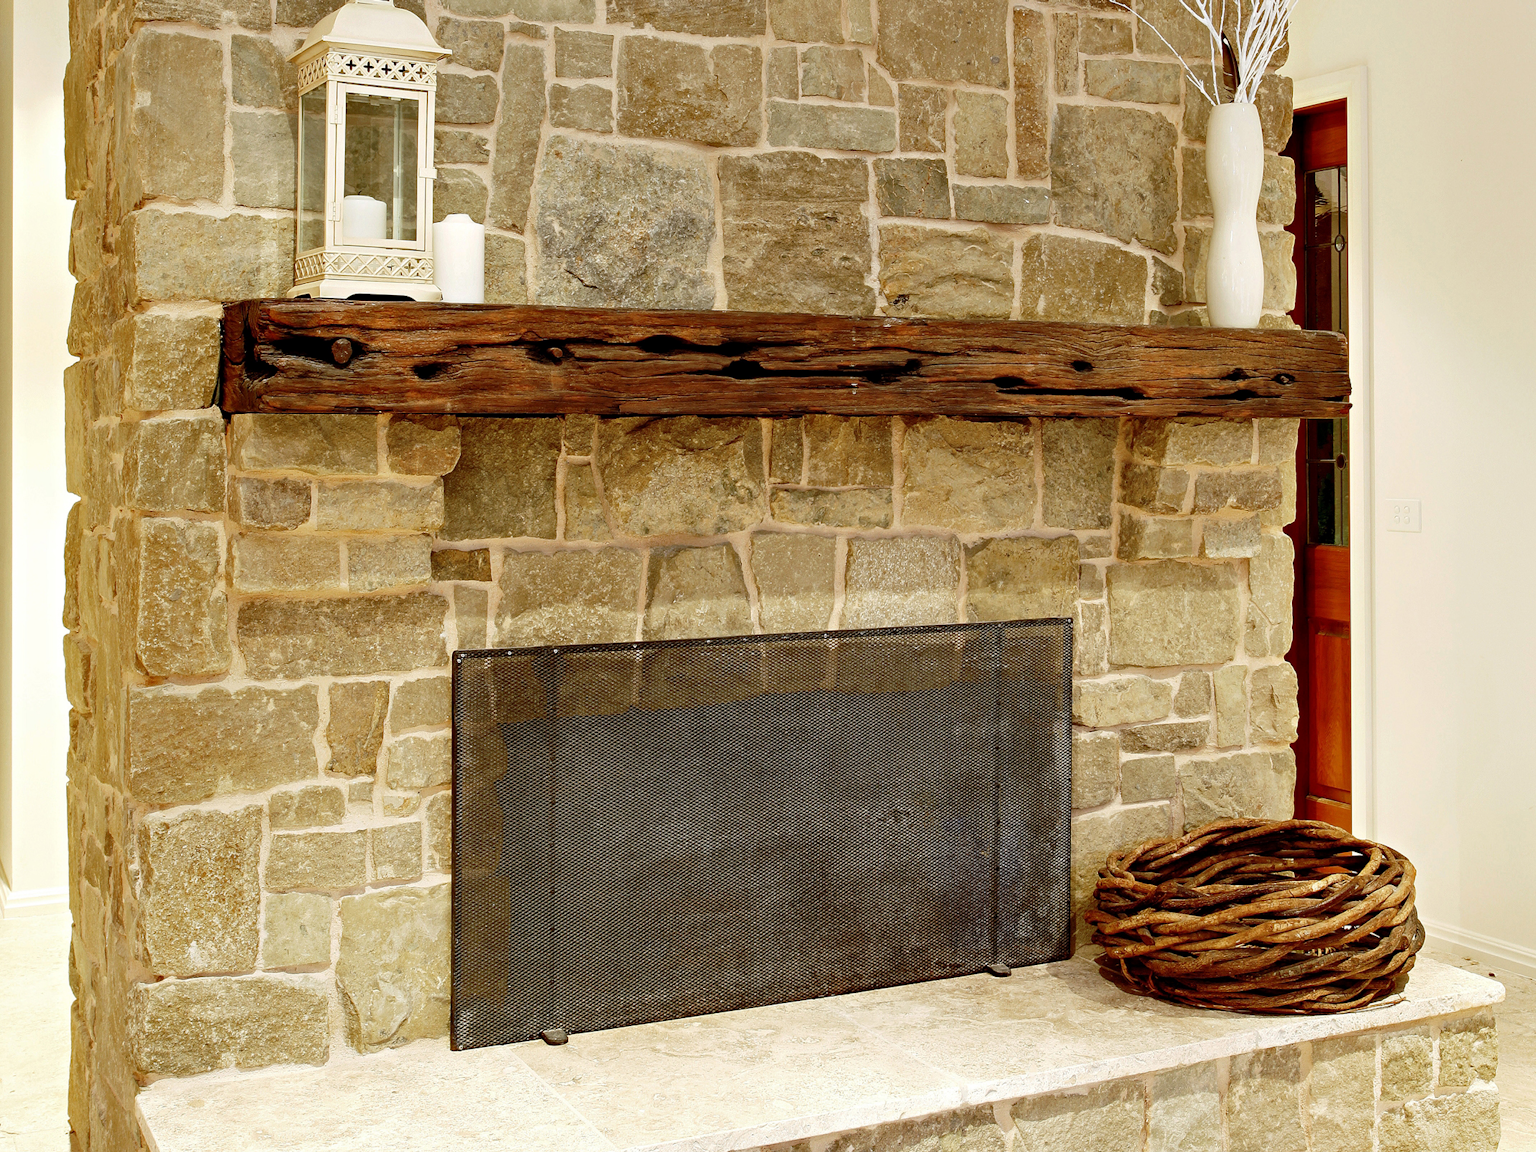 Clancy sandstone random ashlar walling used on internal fireplace with Capri travertine modular flooring and hearth piece